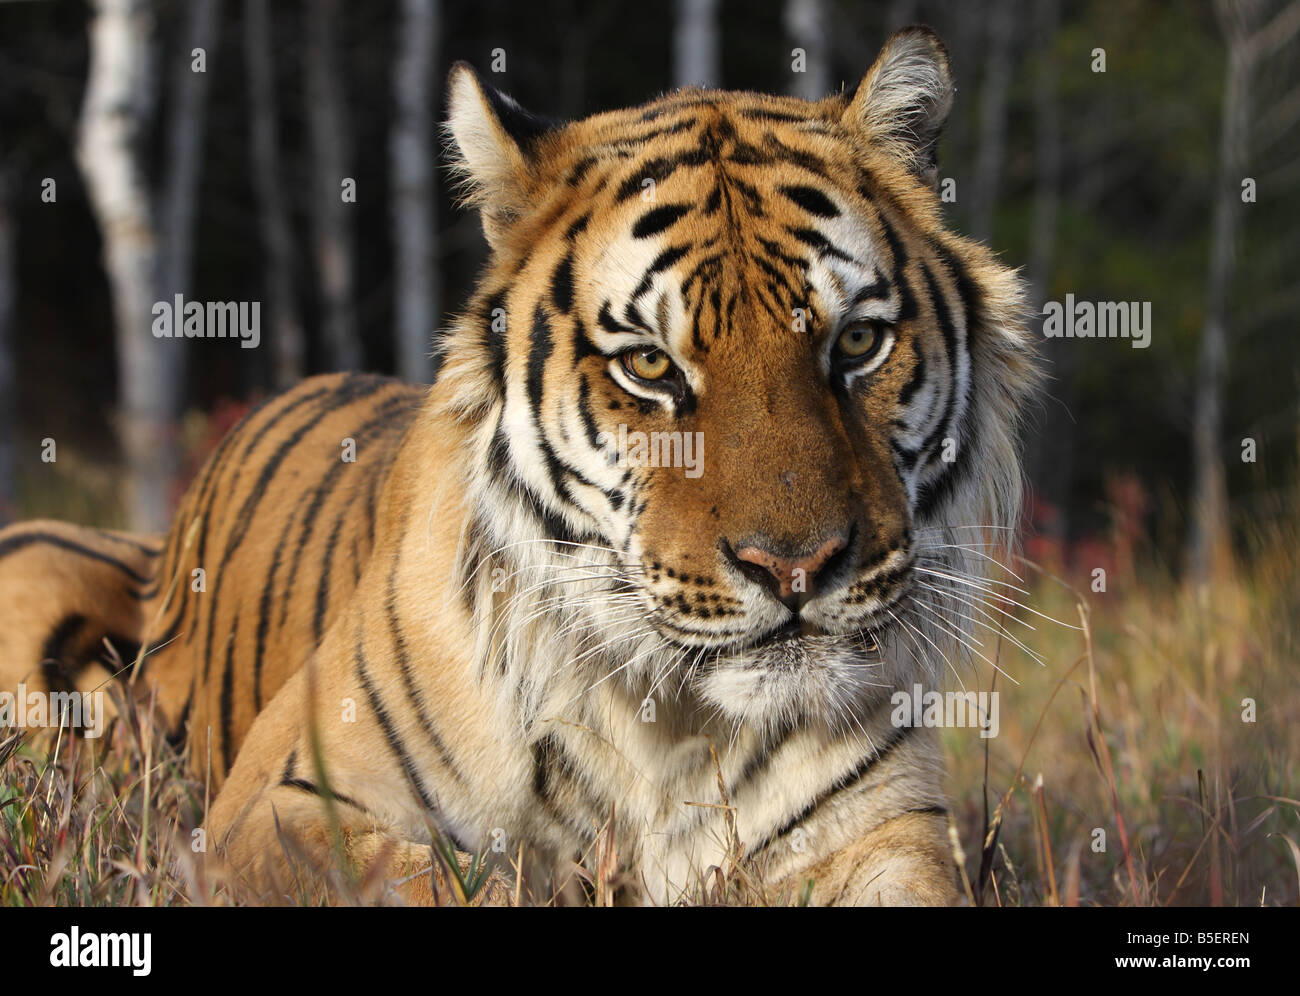 Tigre Foto de stock